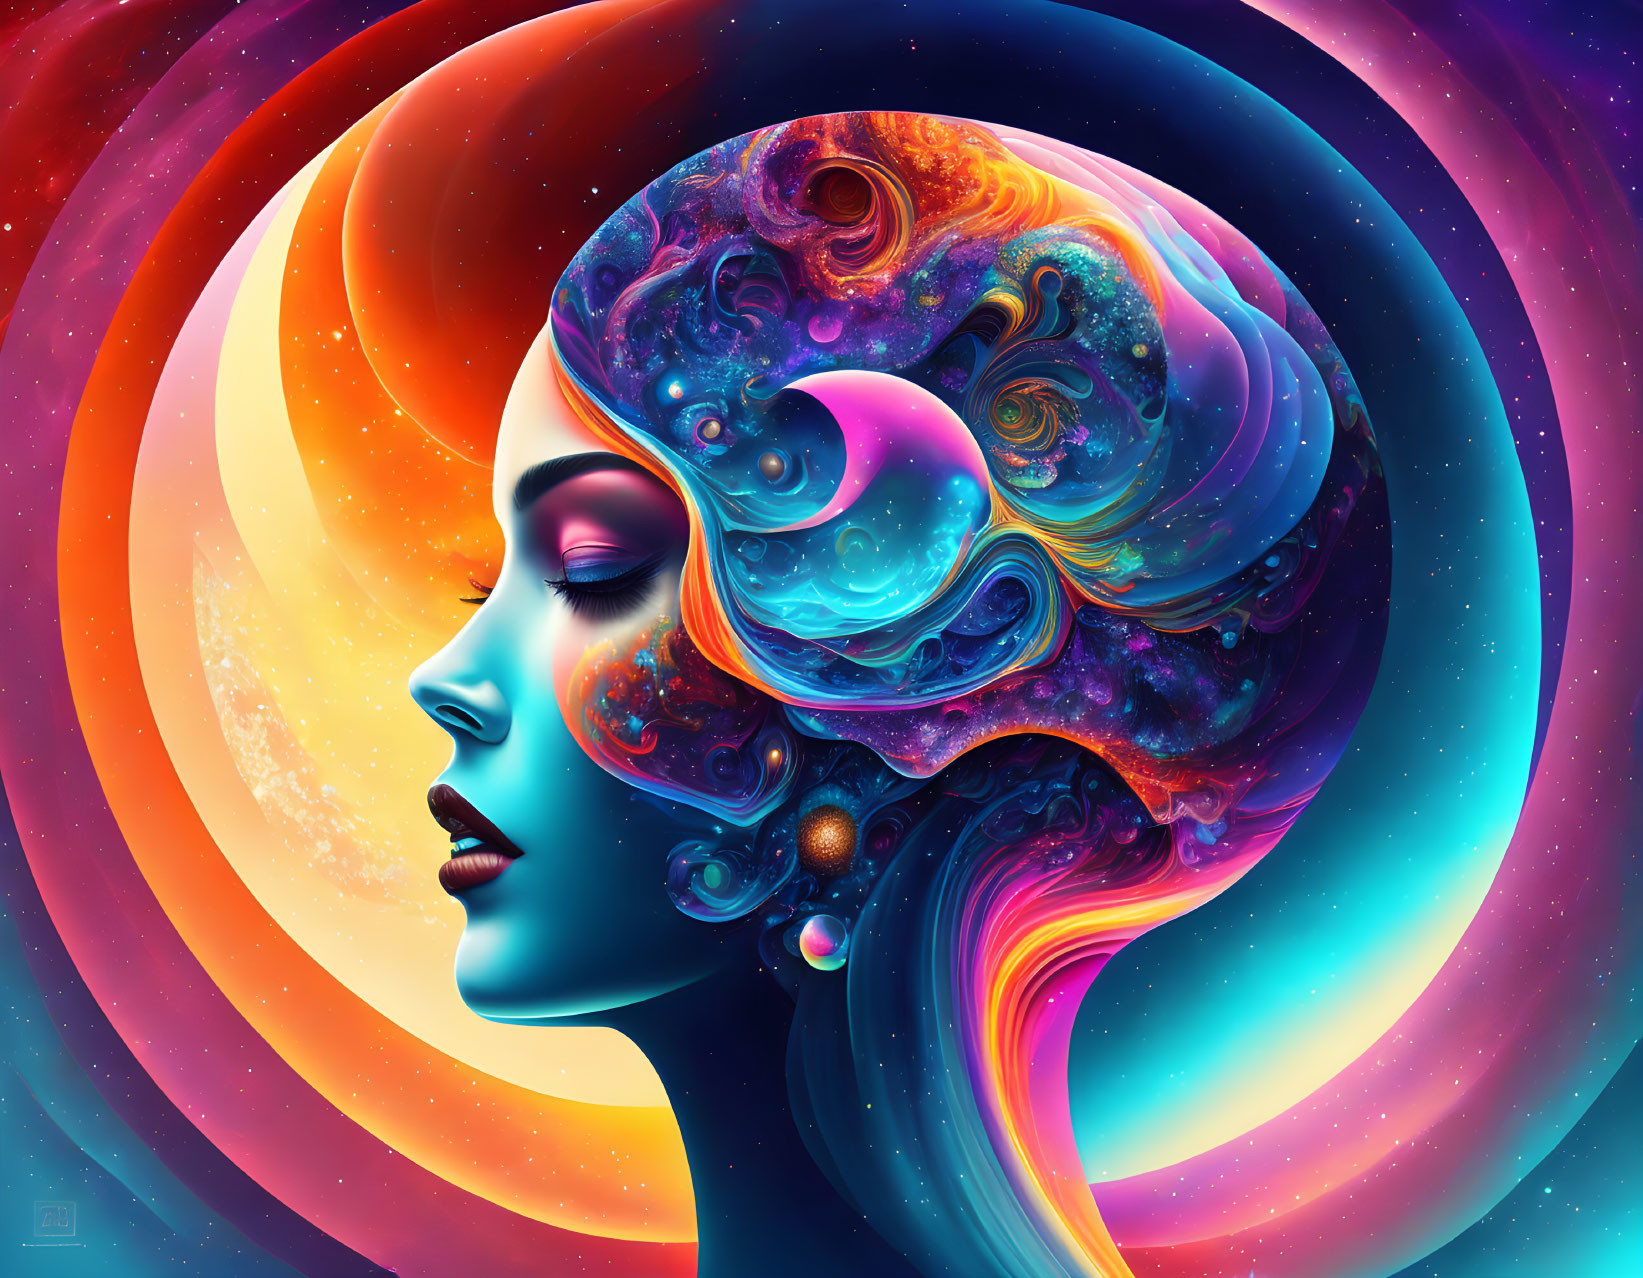 Colorful digital artwork of woman blending into cosmic galaxy